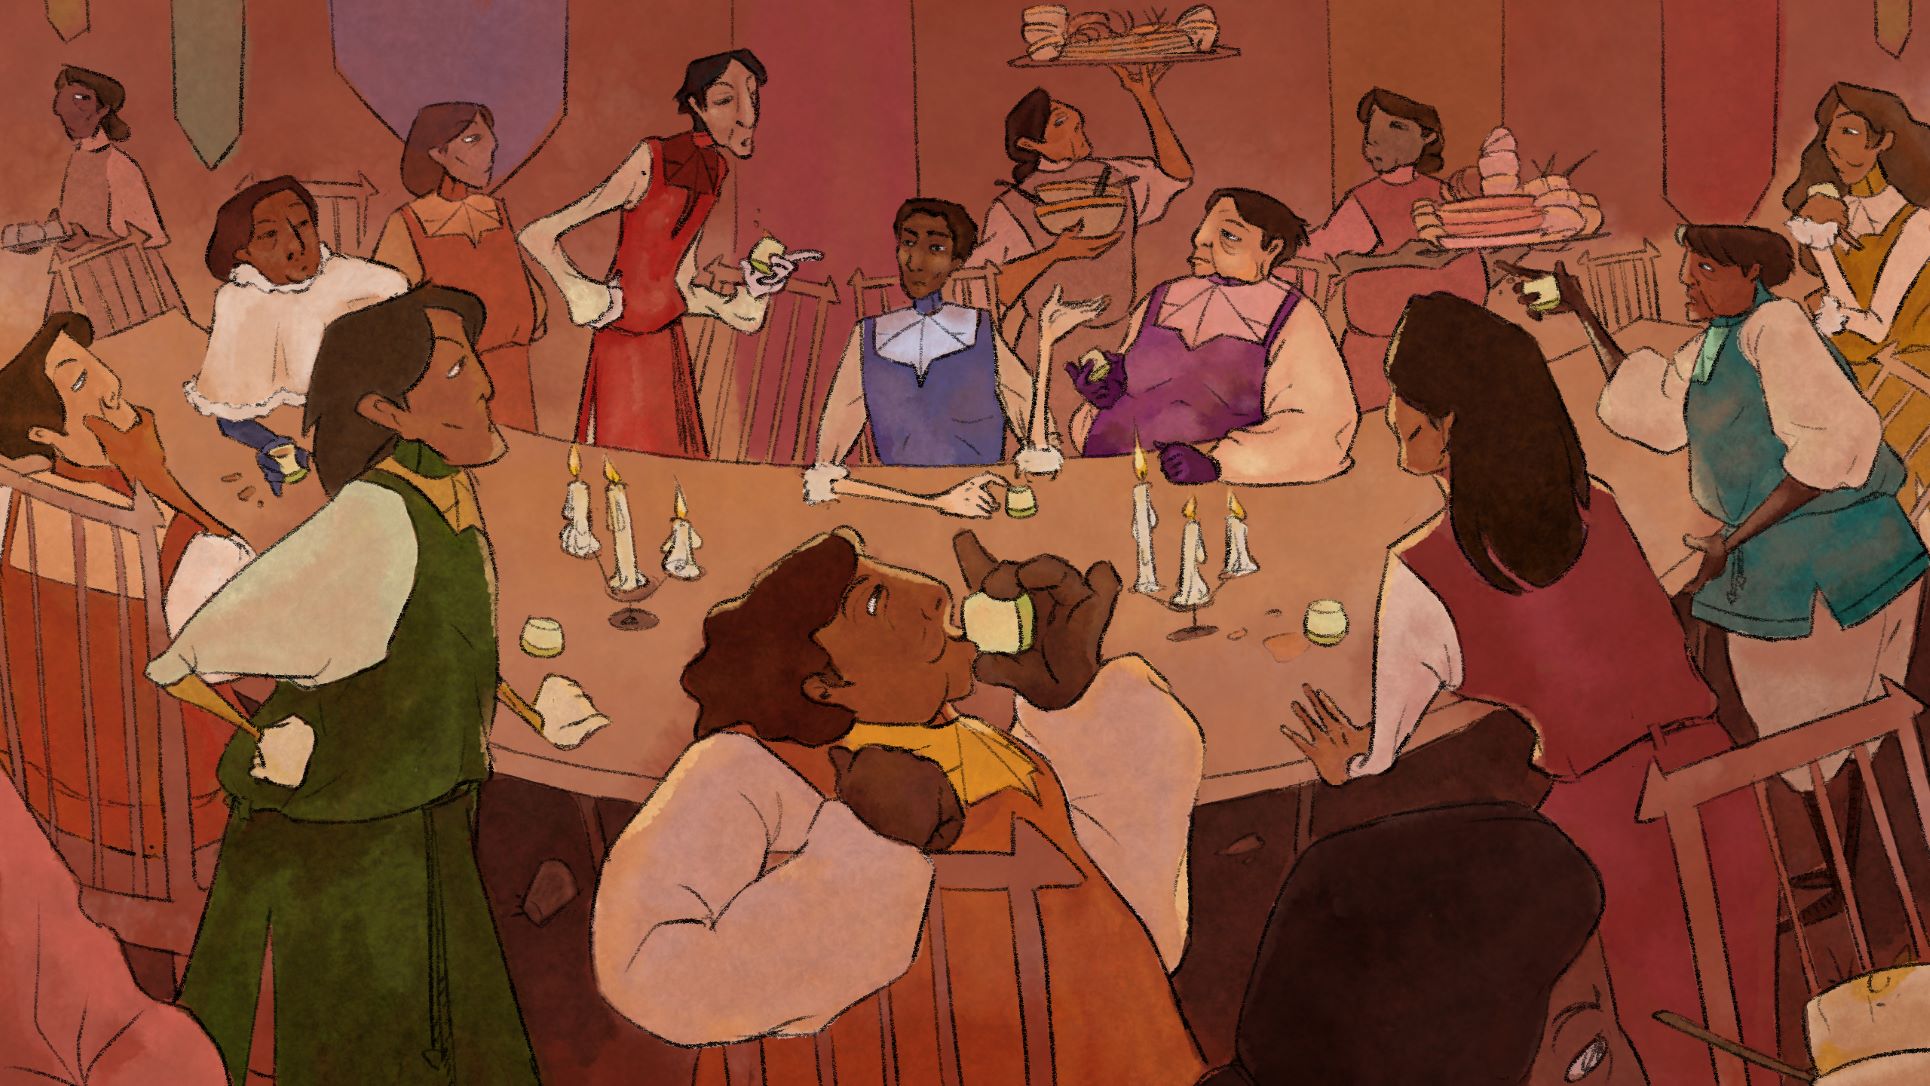 Banquet in Mishnory - Key Beat Illustration